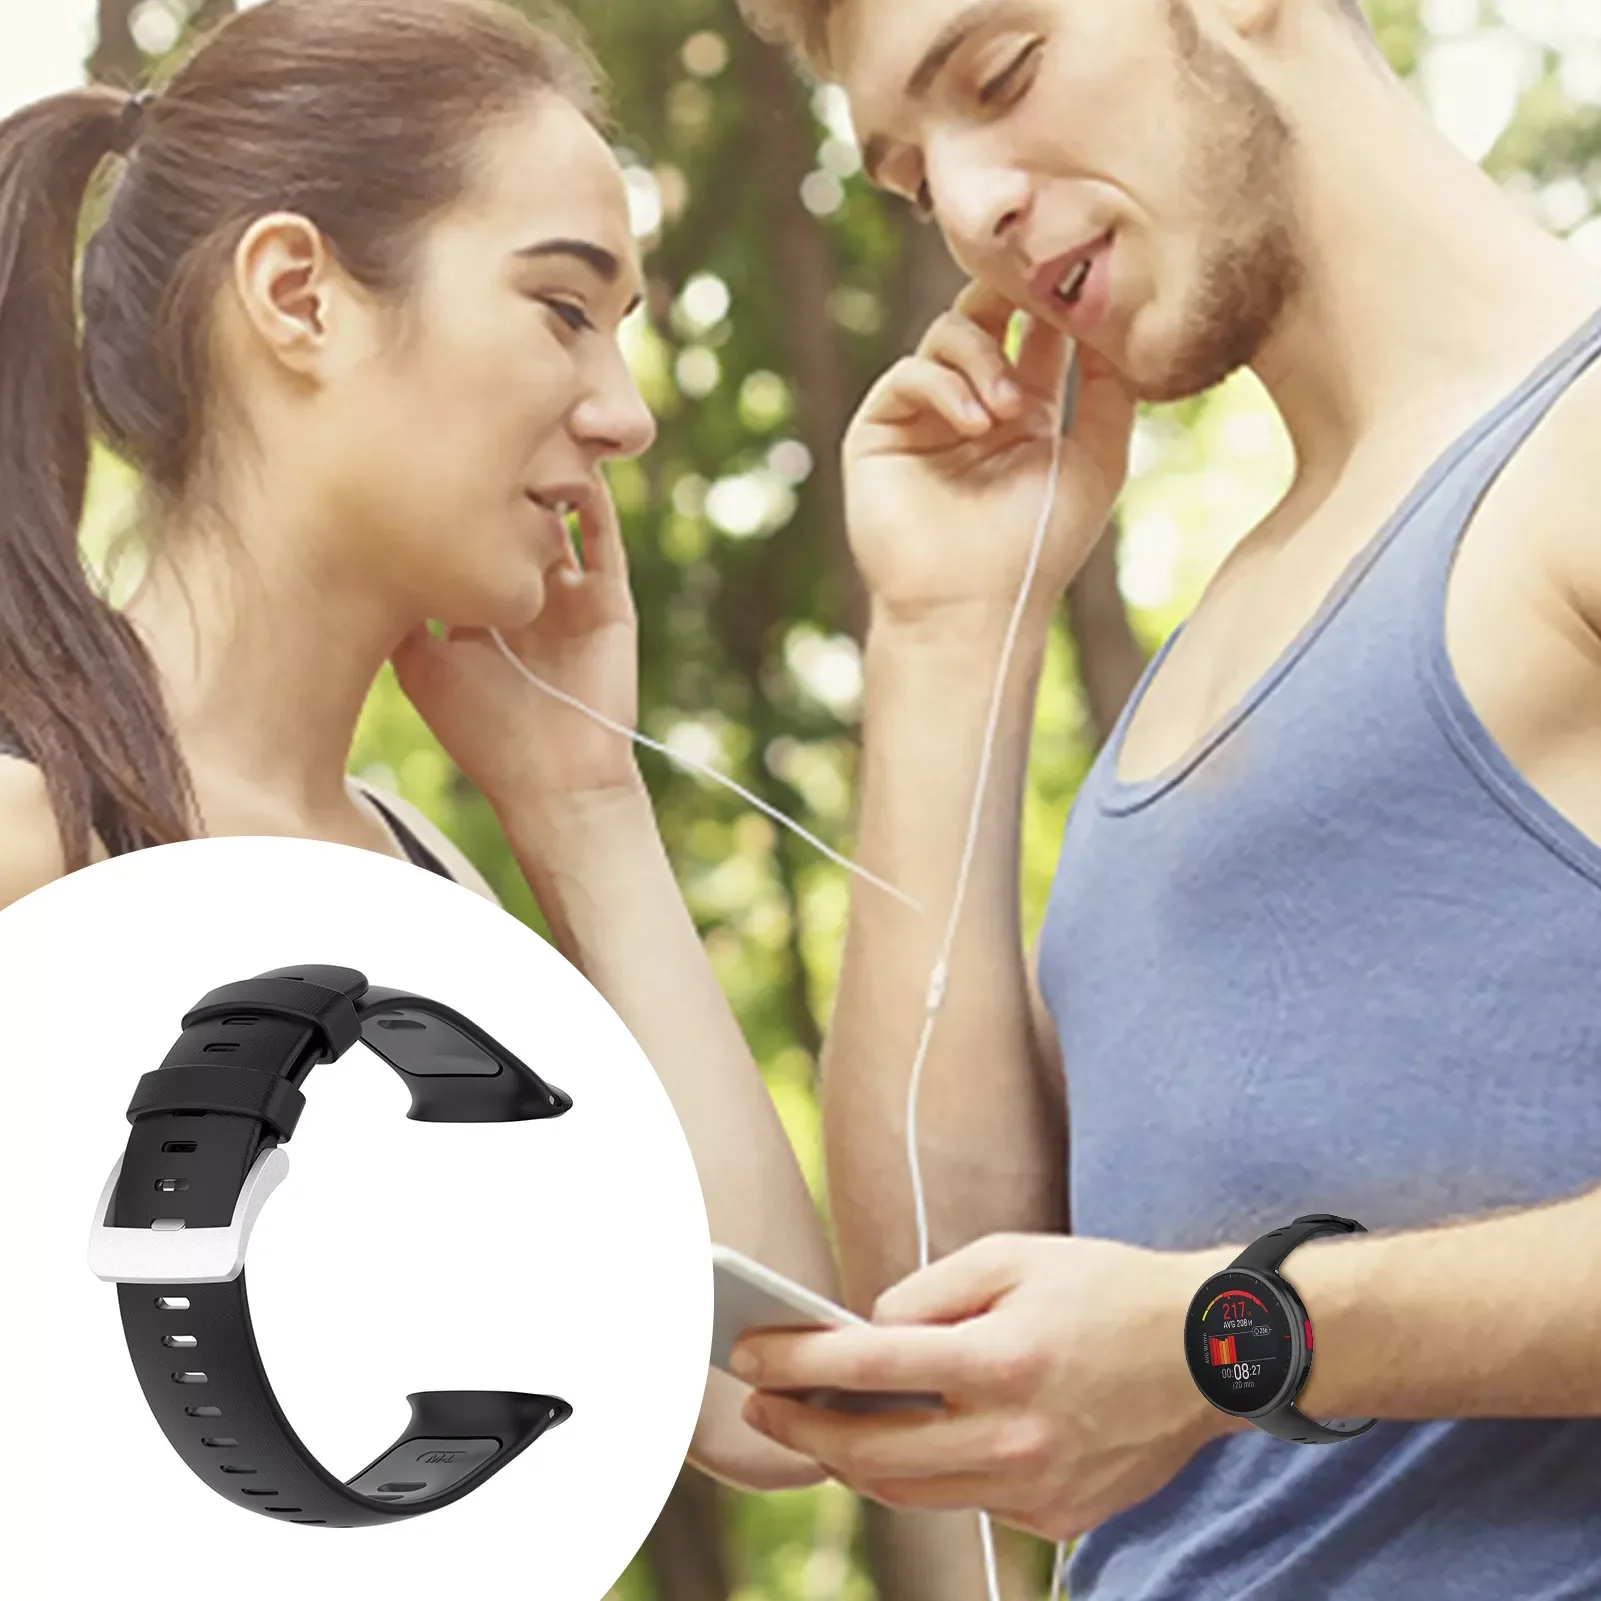 Silicone Bracelet For Vantage V2 Smart Watch Band For Vantage V2 Soft Strap Sport Wrist Band For Vantage Accessories enlarge